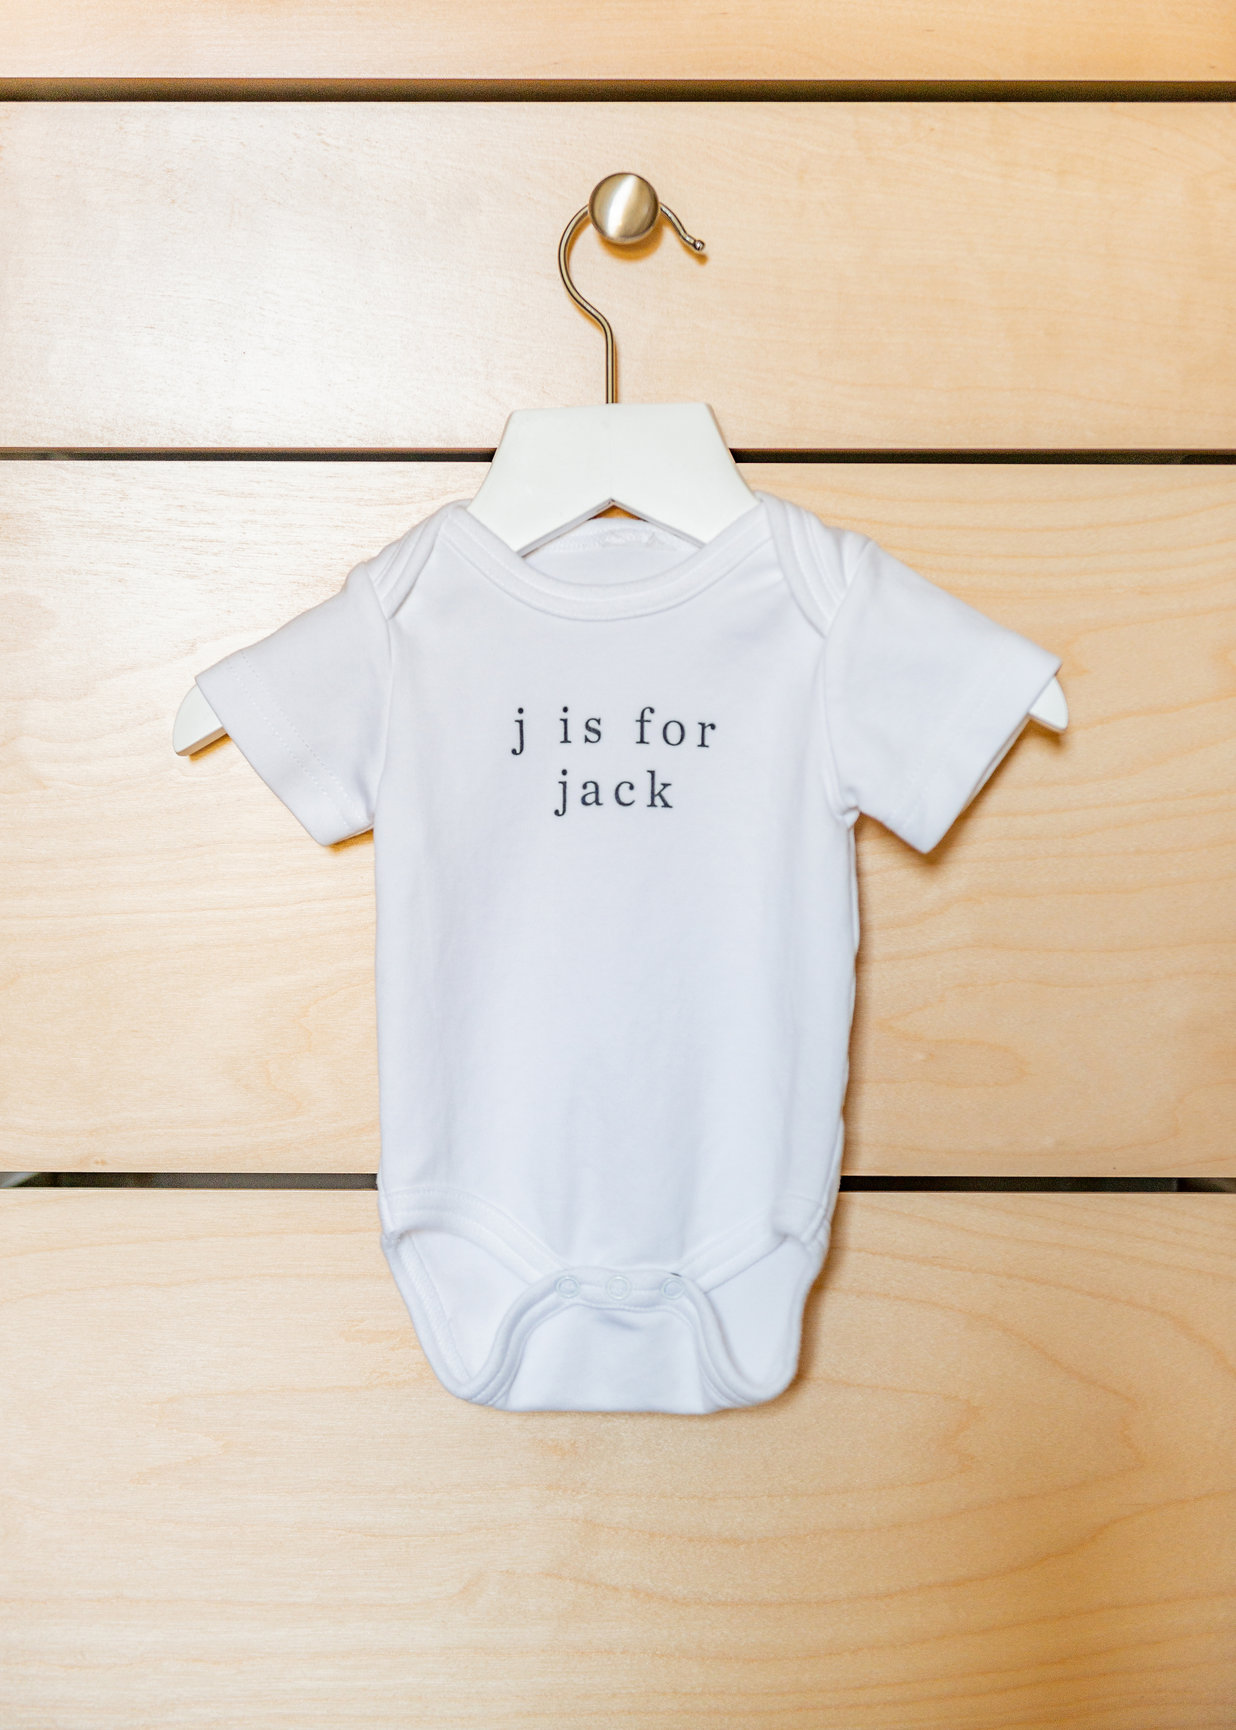 j is for jack onesie, blonde wood drawers, cream colored baby hanger